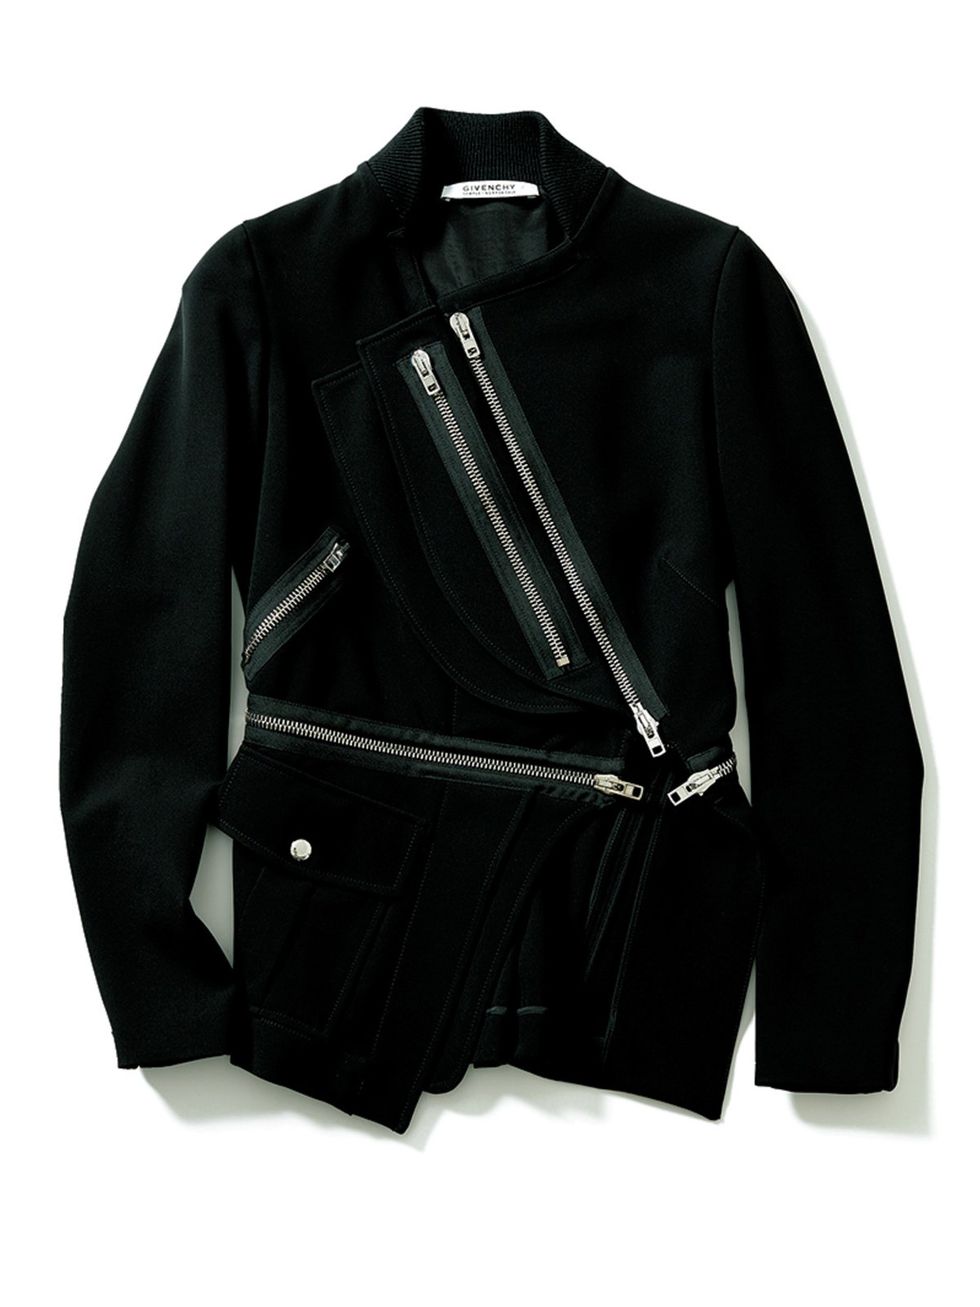 Collar, Sleeve, Textile, Outerwear, Coat, Jacket, Fashion, Black, Fashion design, Clothes hanger, 